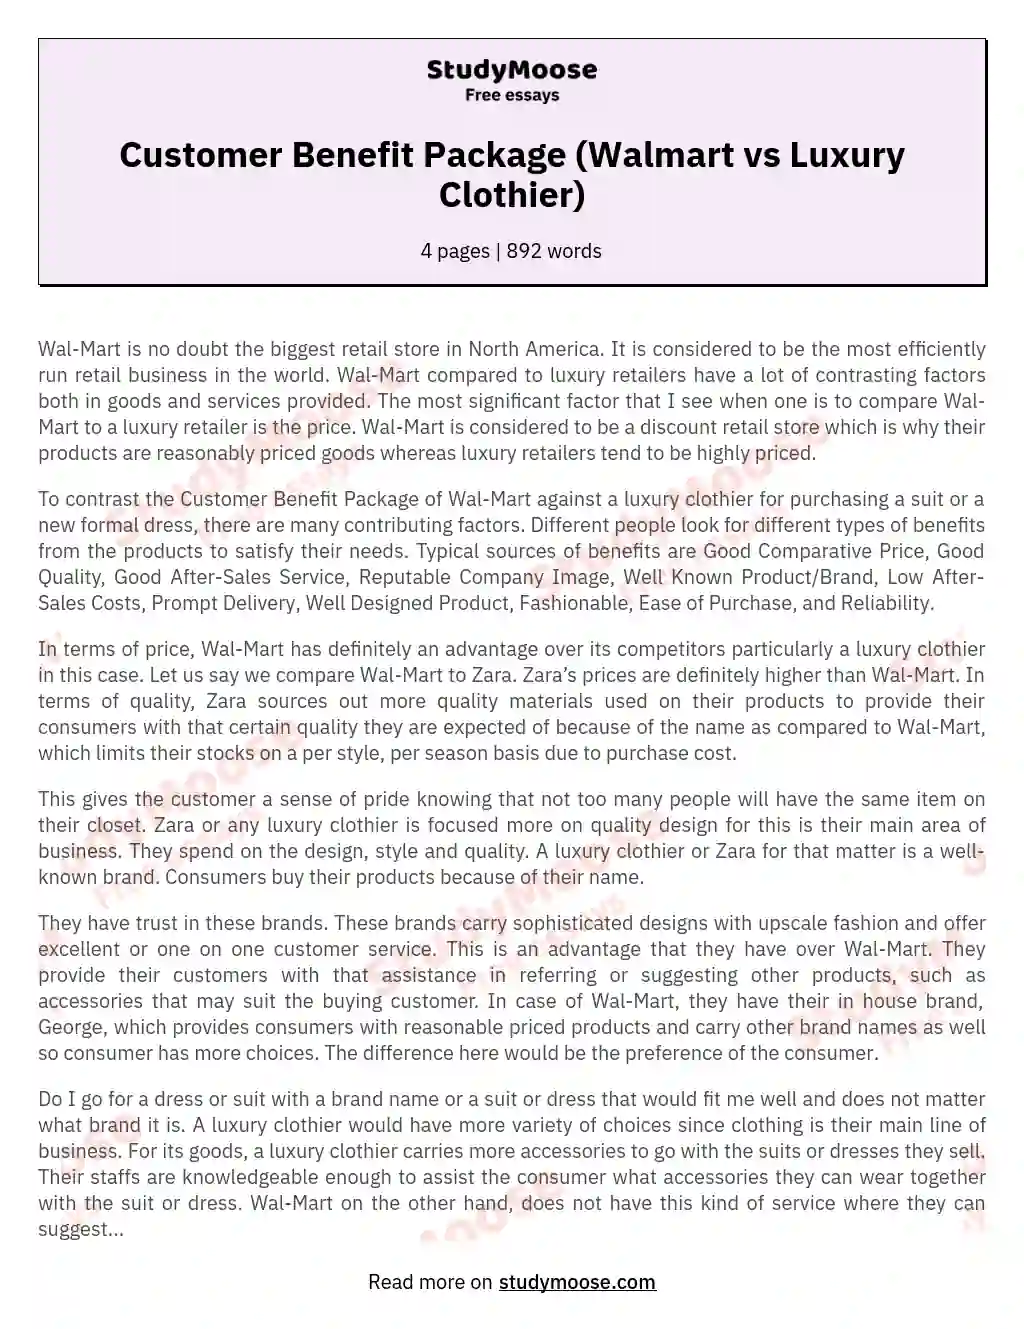 Customer Benefit Package (Walmart vs Luxury Clothier) essay